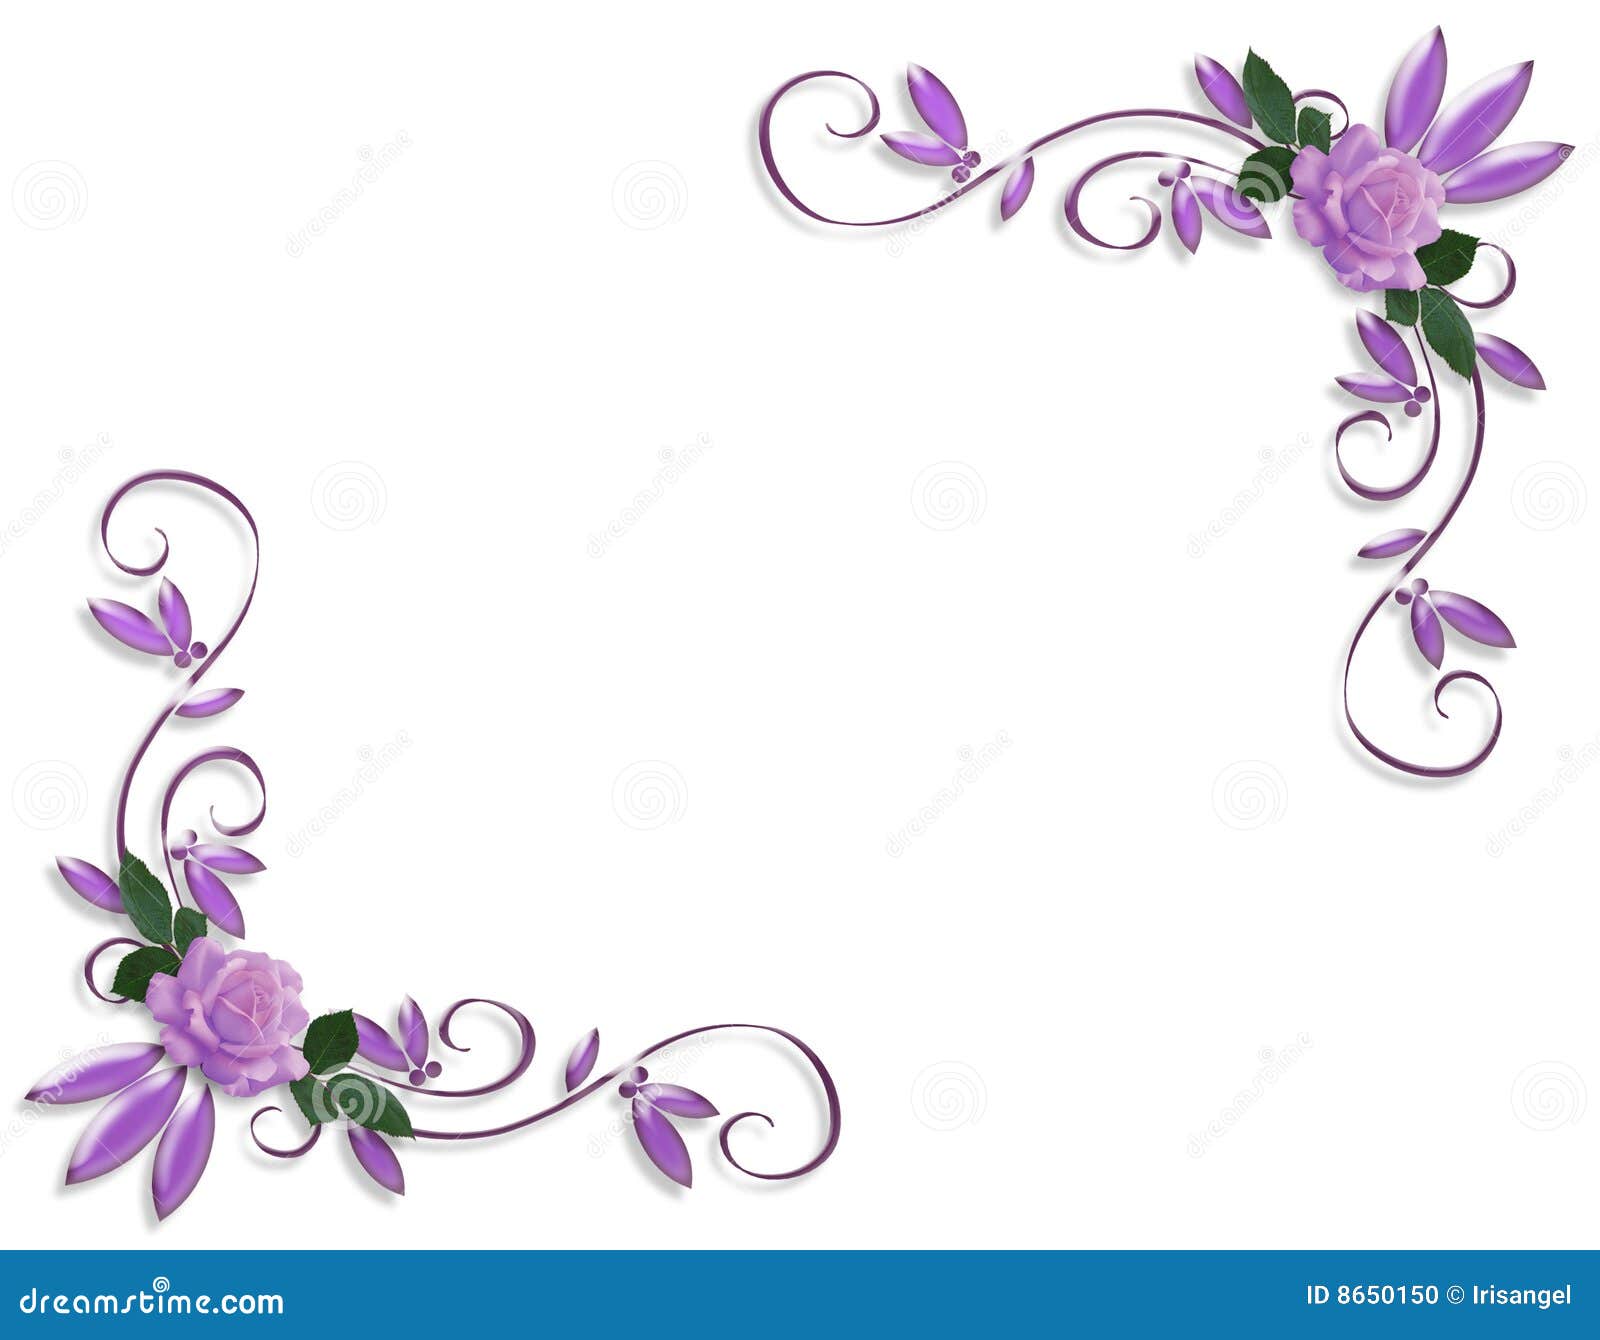 Purple Roses Corner Border Designs Stock Illustration ...